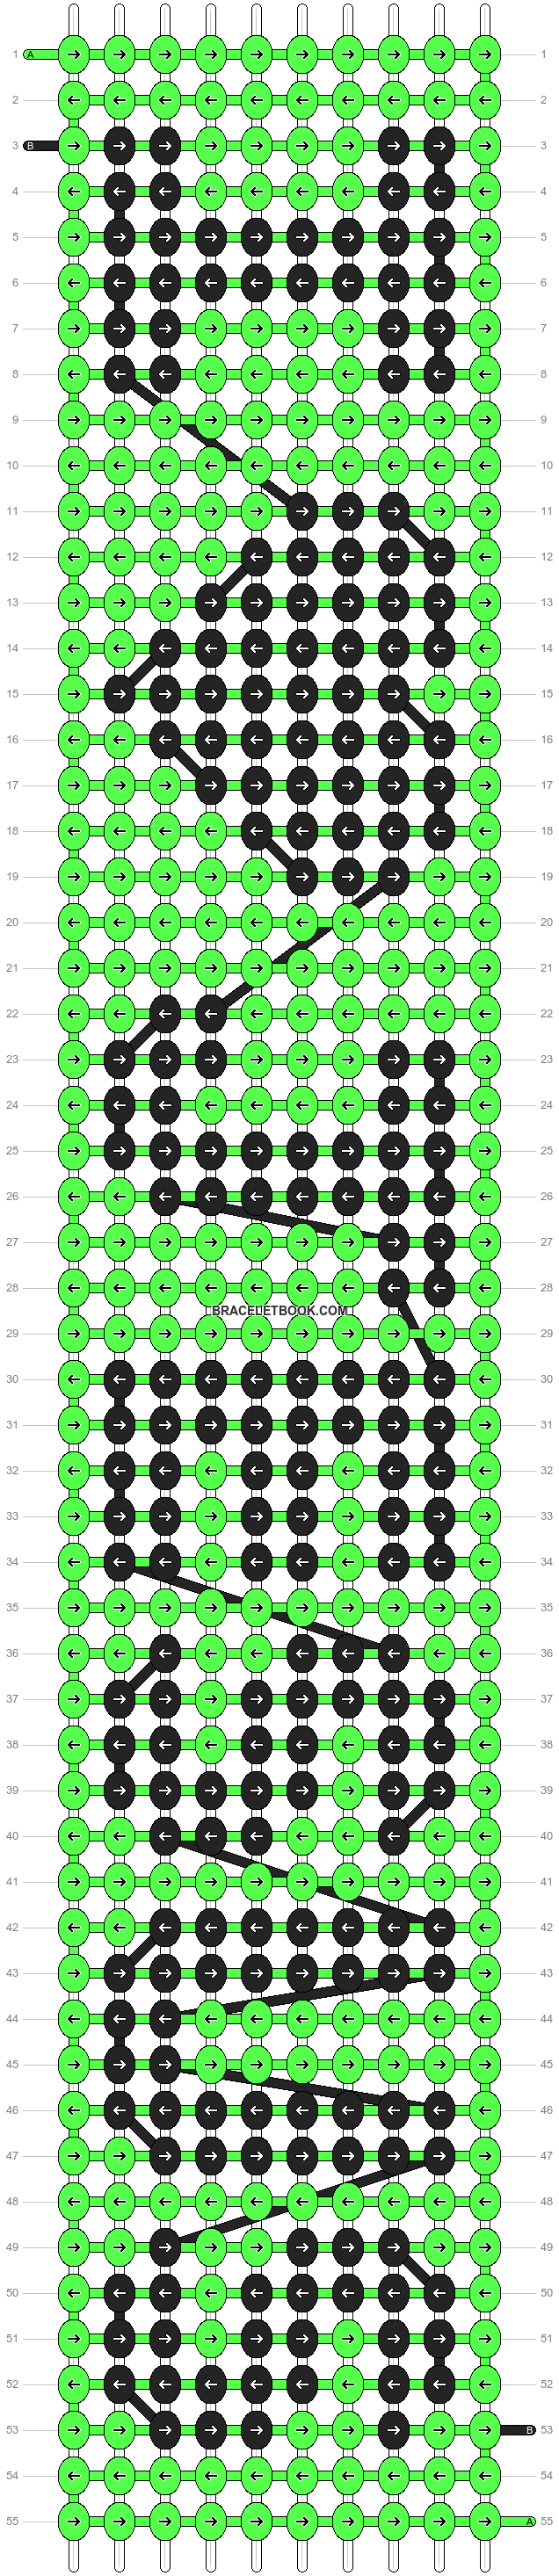 Alpha pattern #19594 pattern